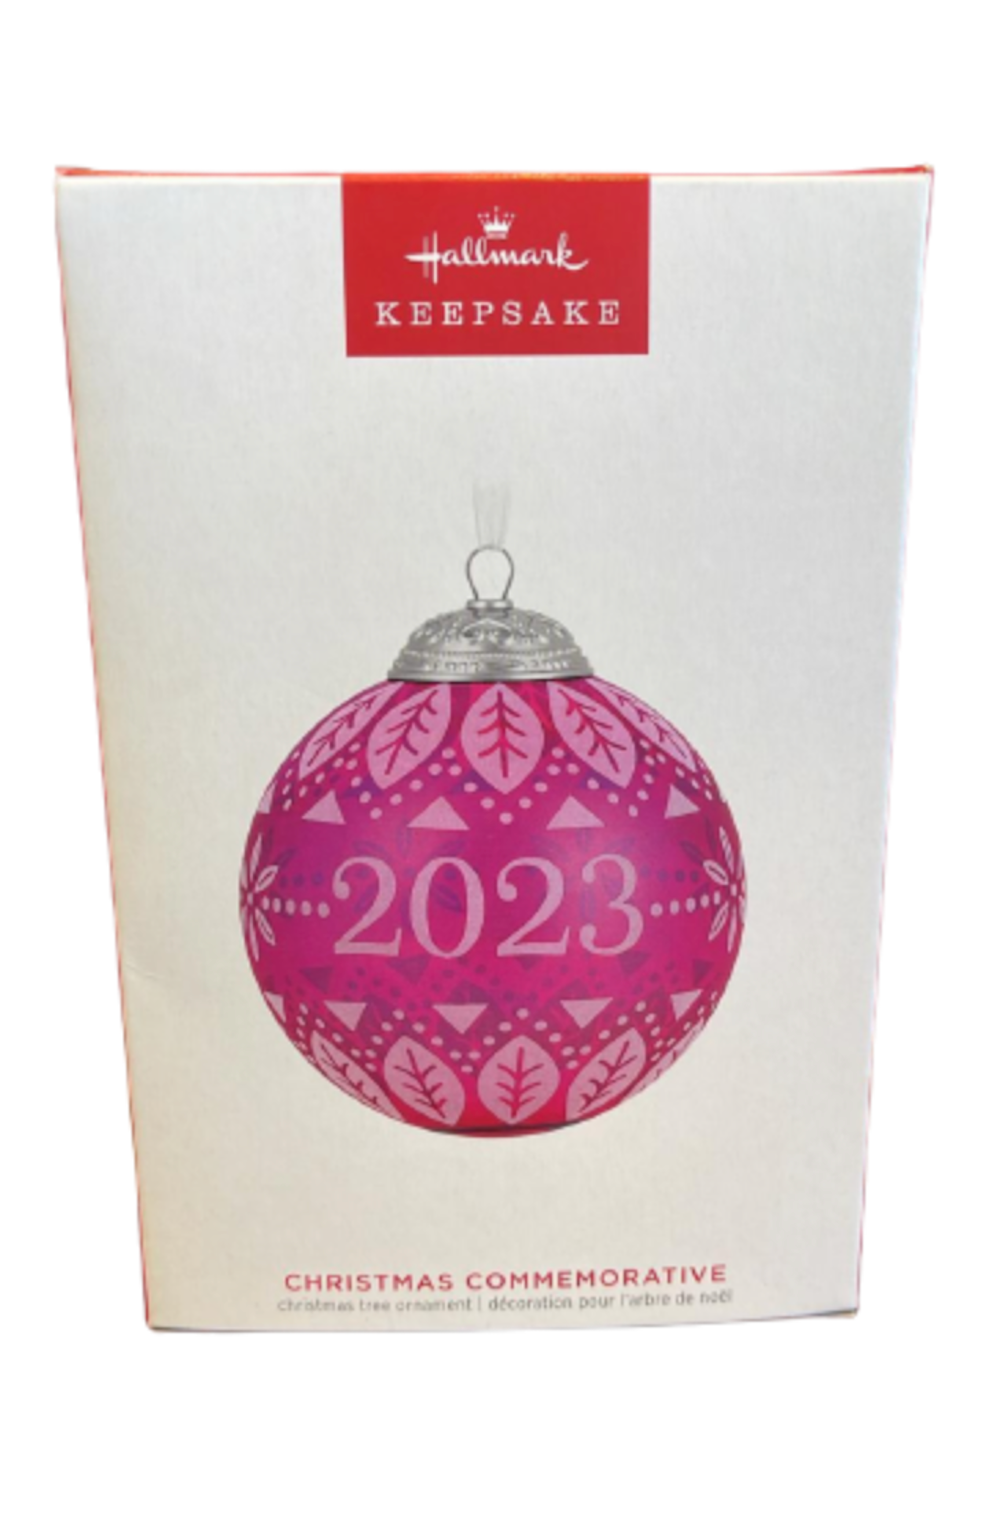 Hallmark 2023 Keepsake Commemorative Glass Ball Christmas Ornament New w Box